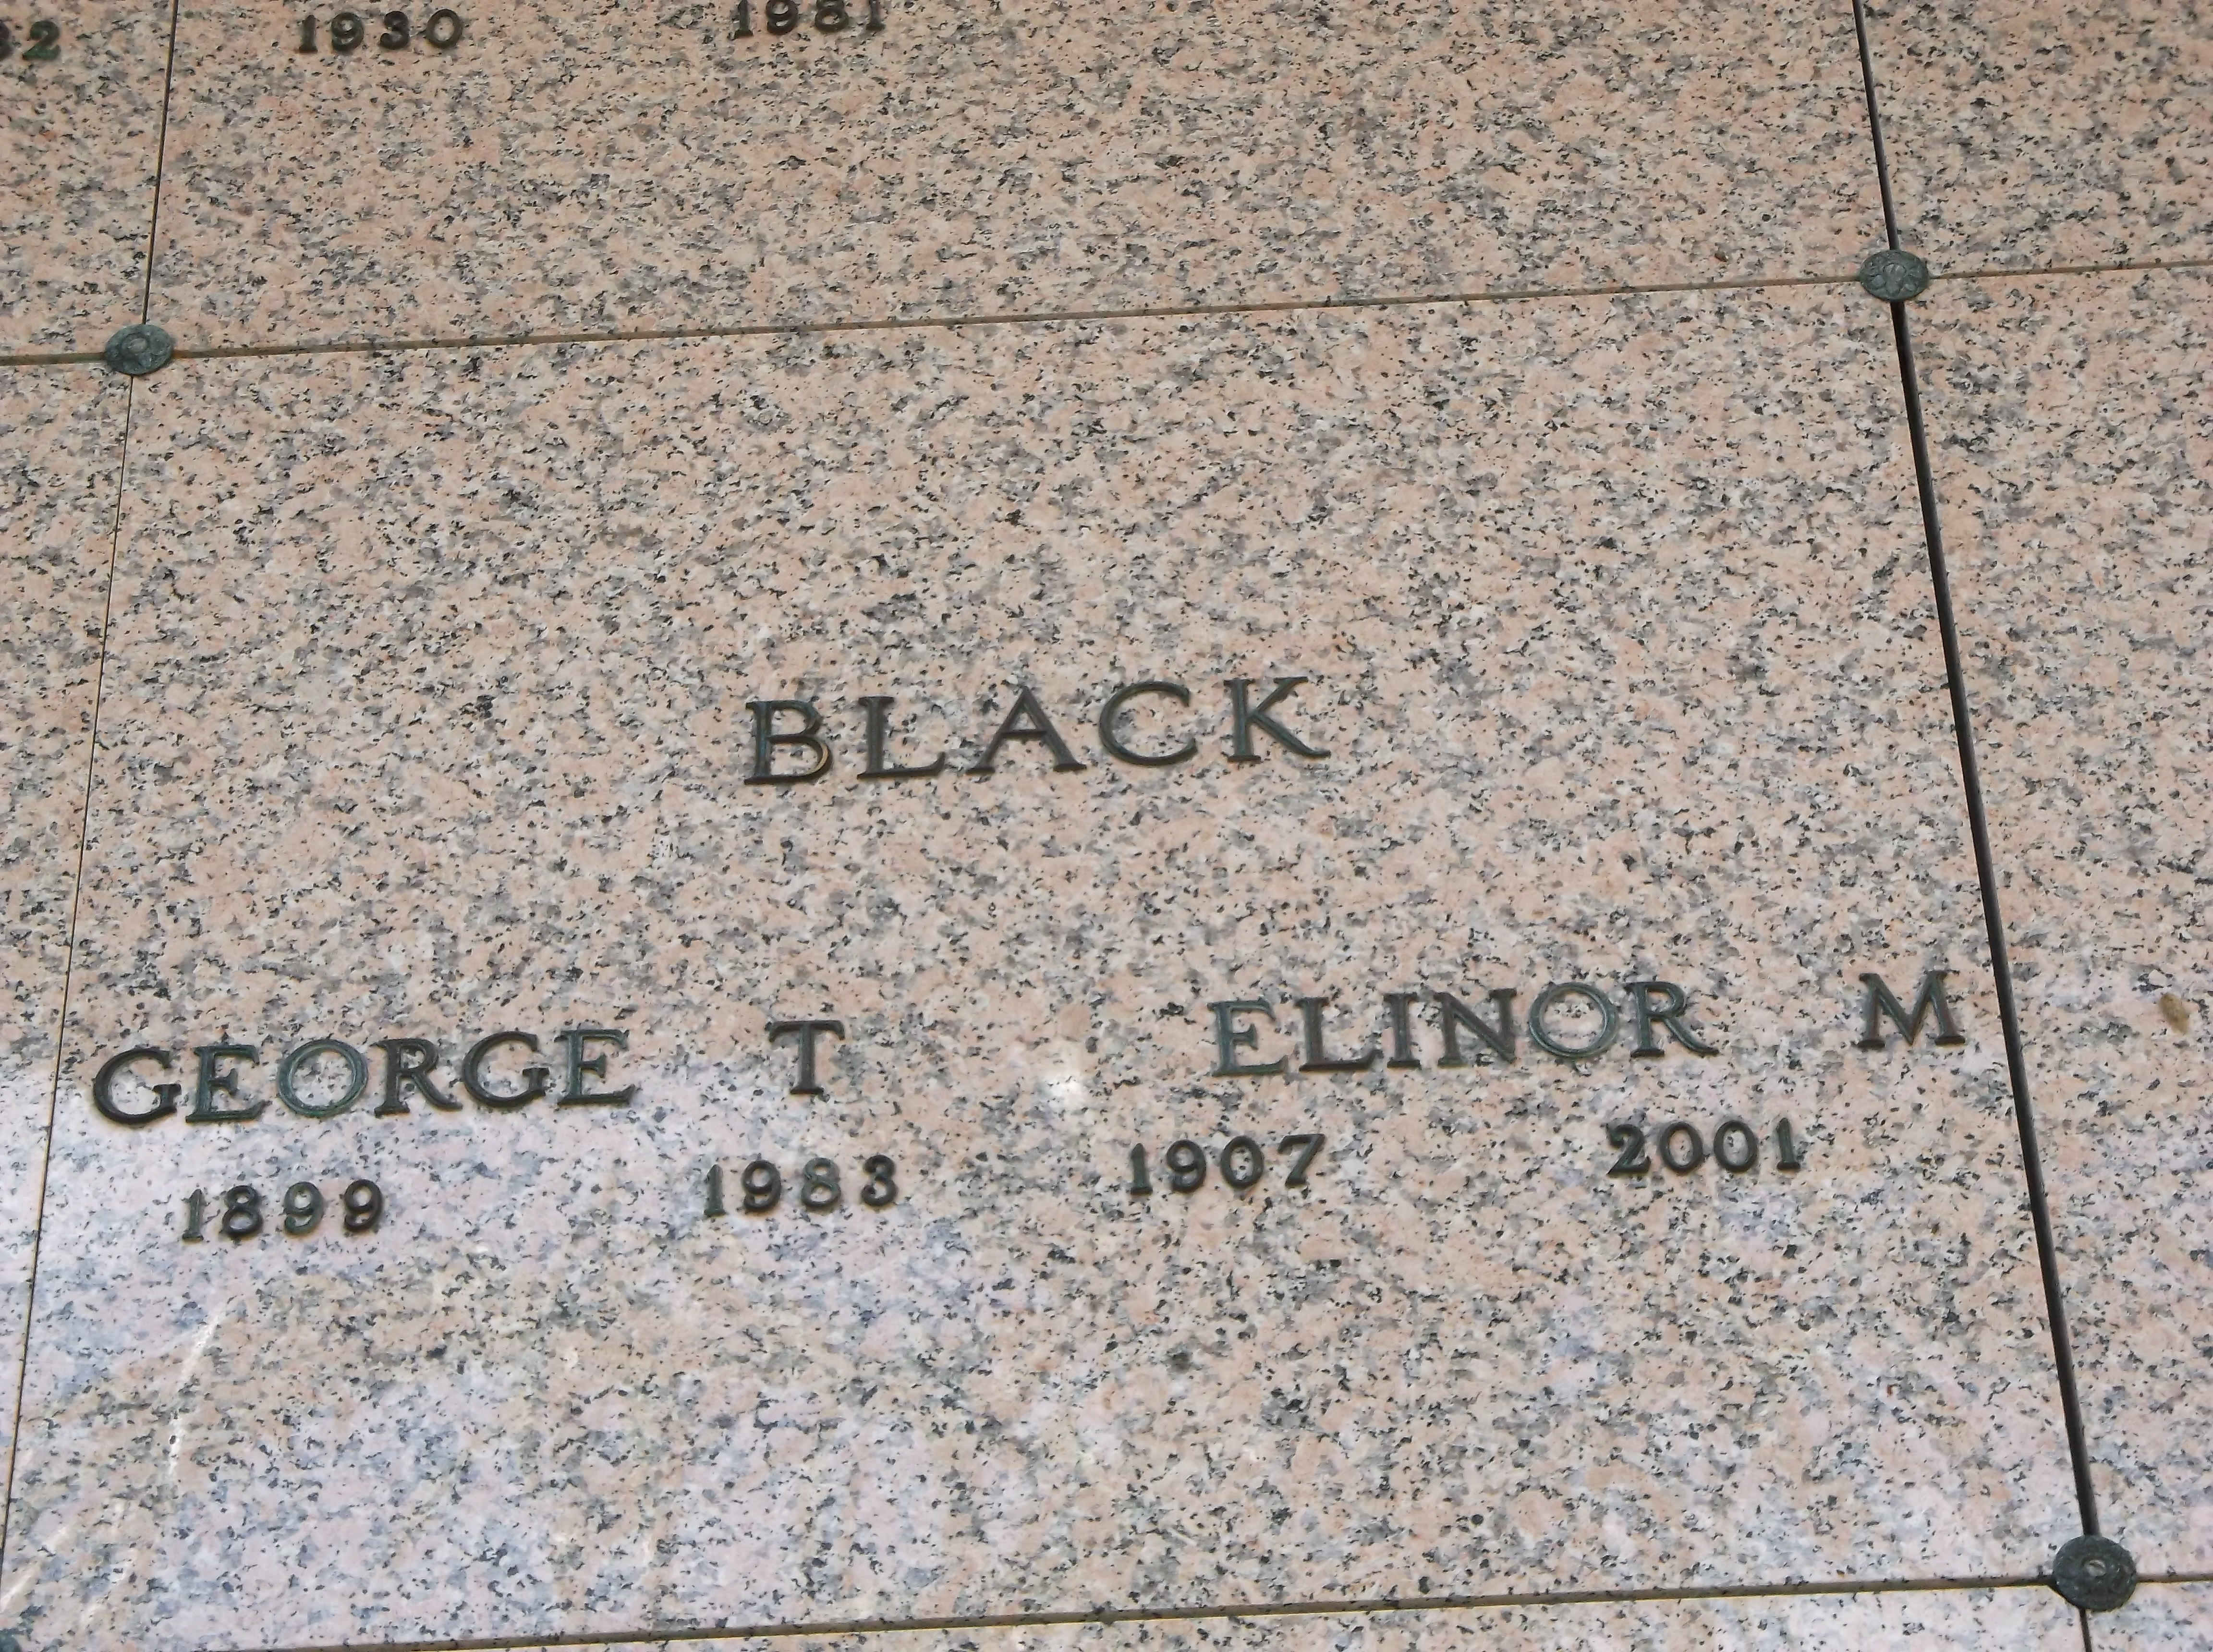 Elinor M Black